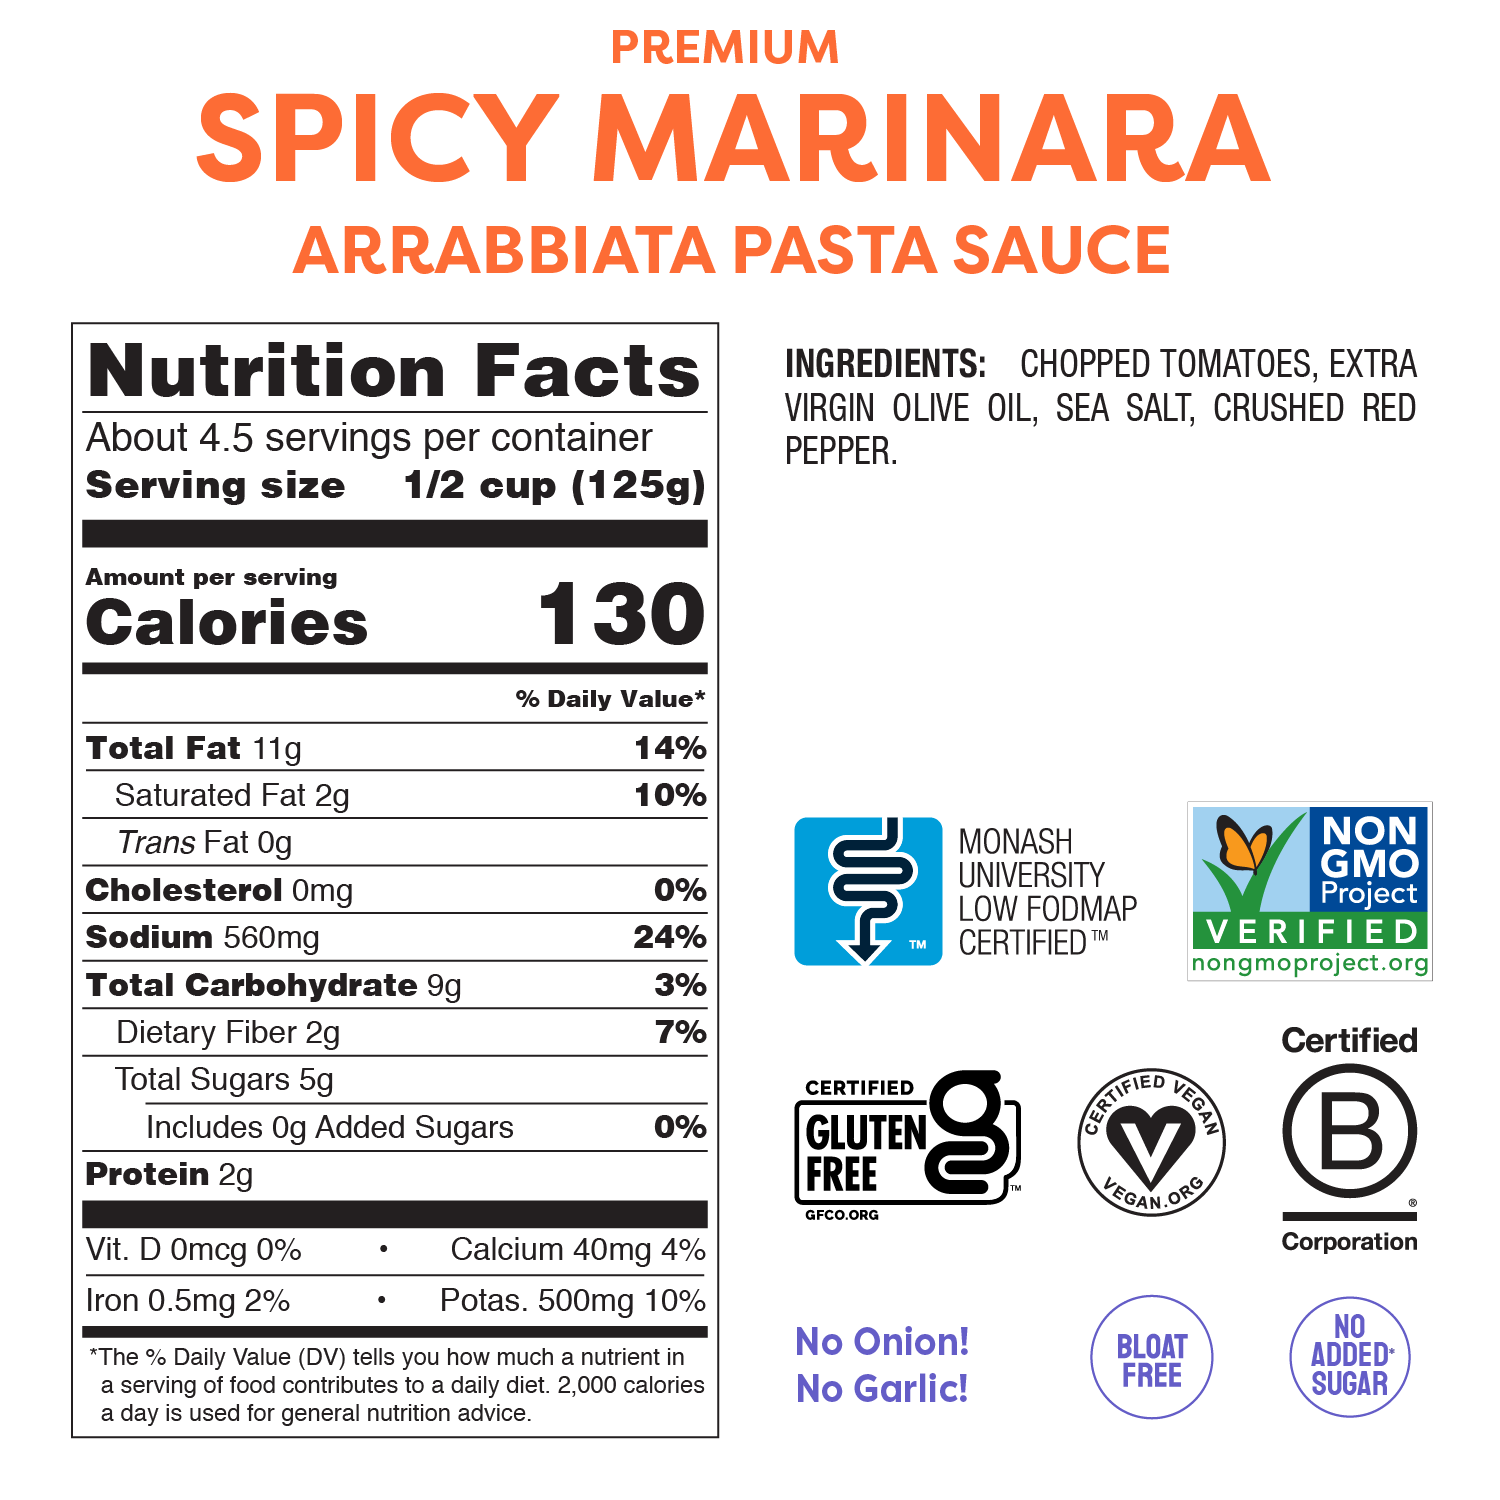 Spicy Marinara (Arrabbiata) Pasta Sauce